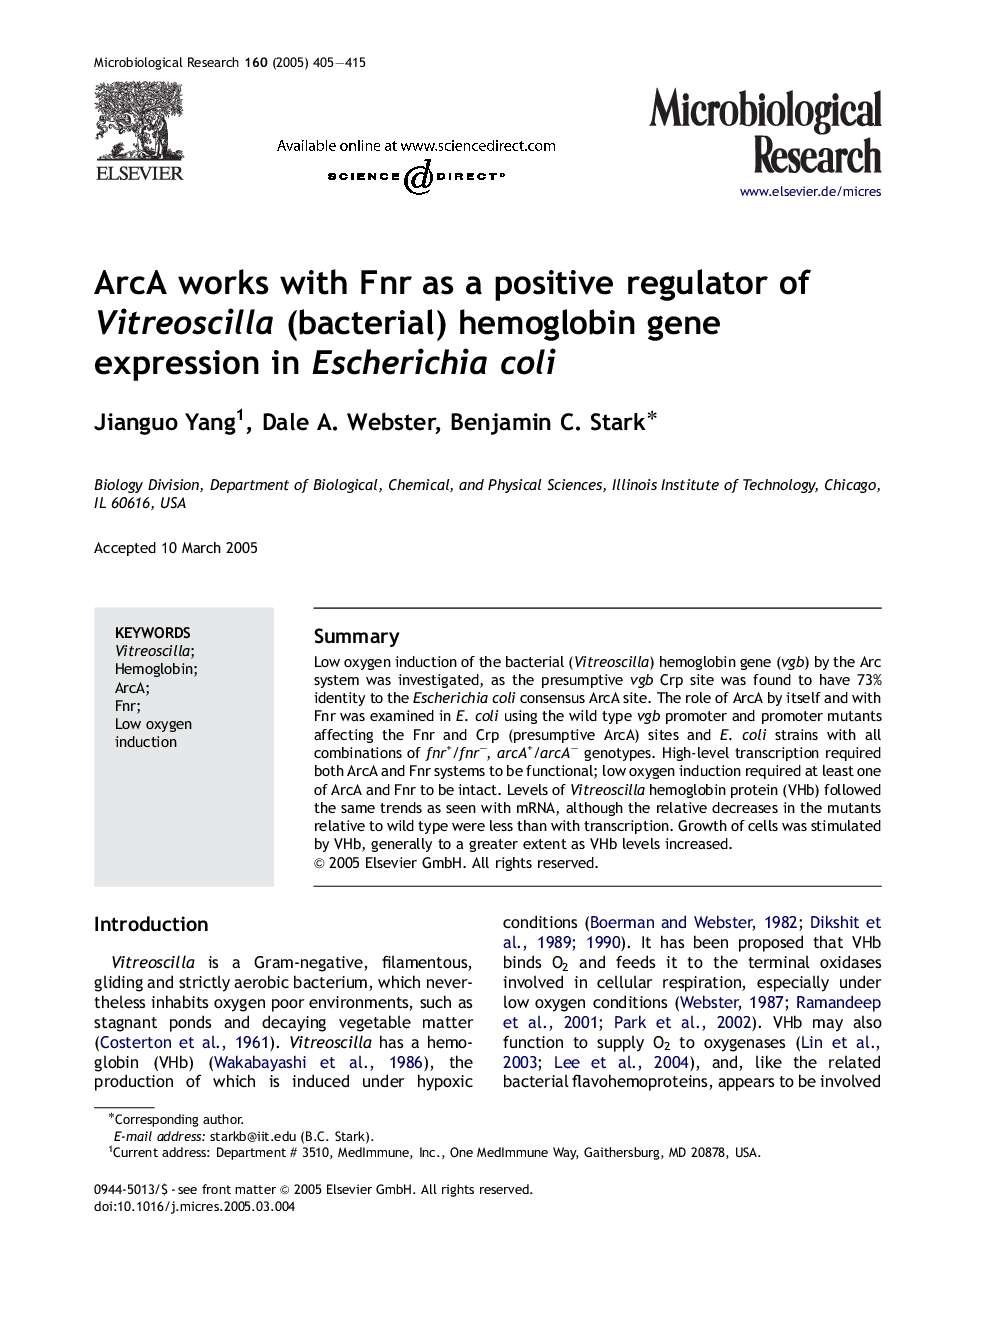 ArcA works with Fnr as a positive regulator of Vitreoscilla (bacterial) hemoglobin gene expression in Escherichia coli